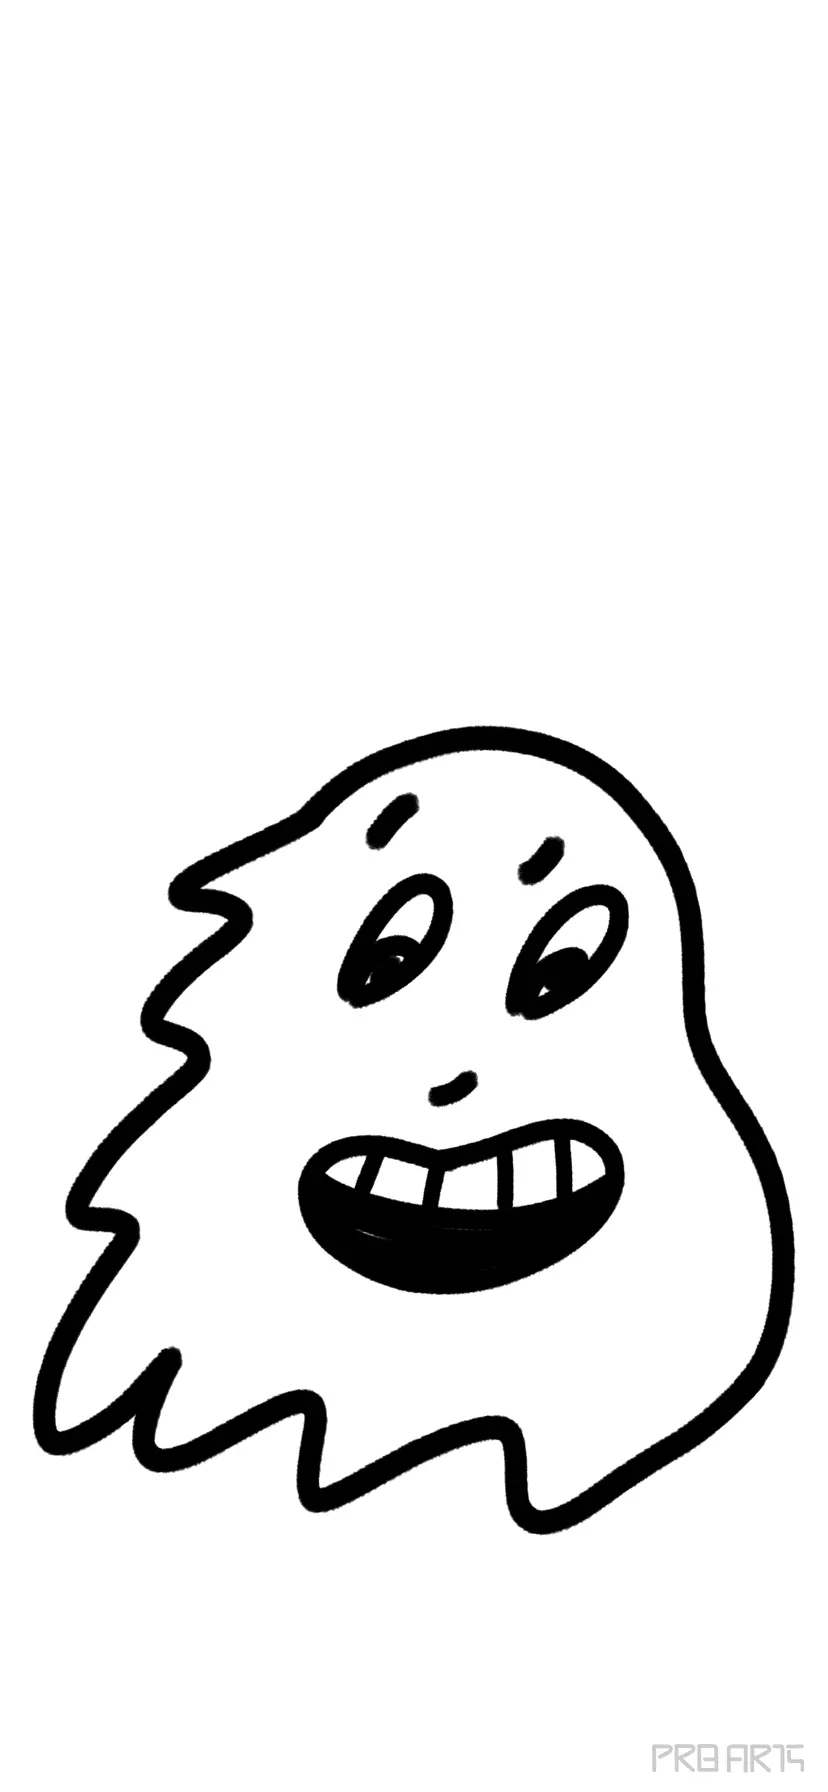 Funny Cartoon Ghost Face Drawing Tutorial - PRB ARTS